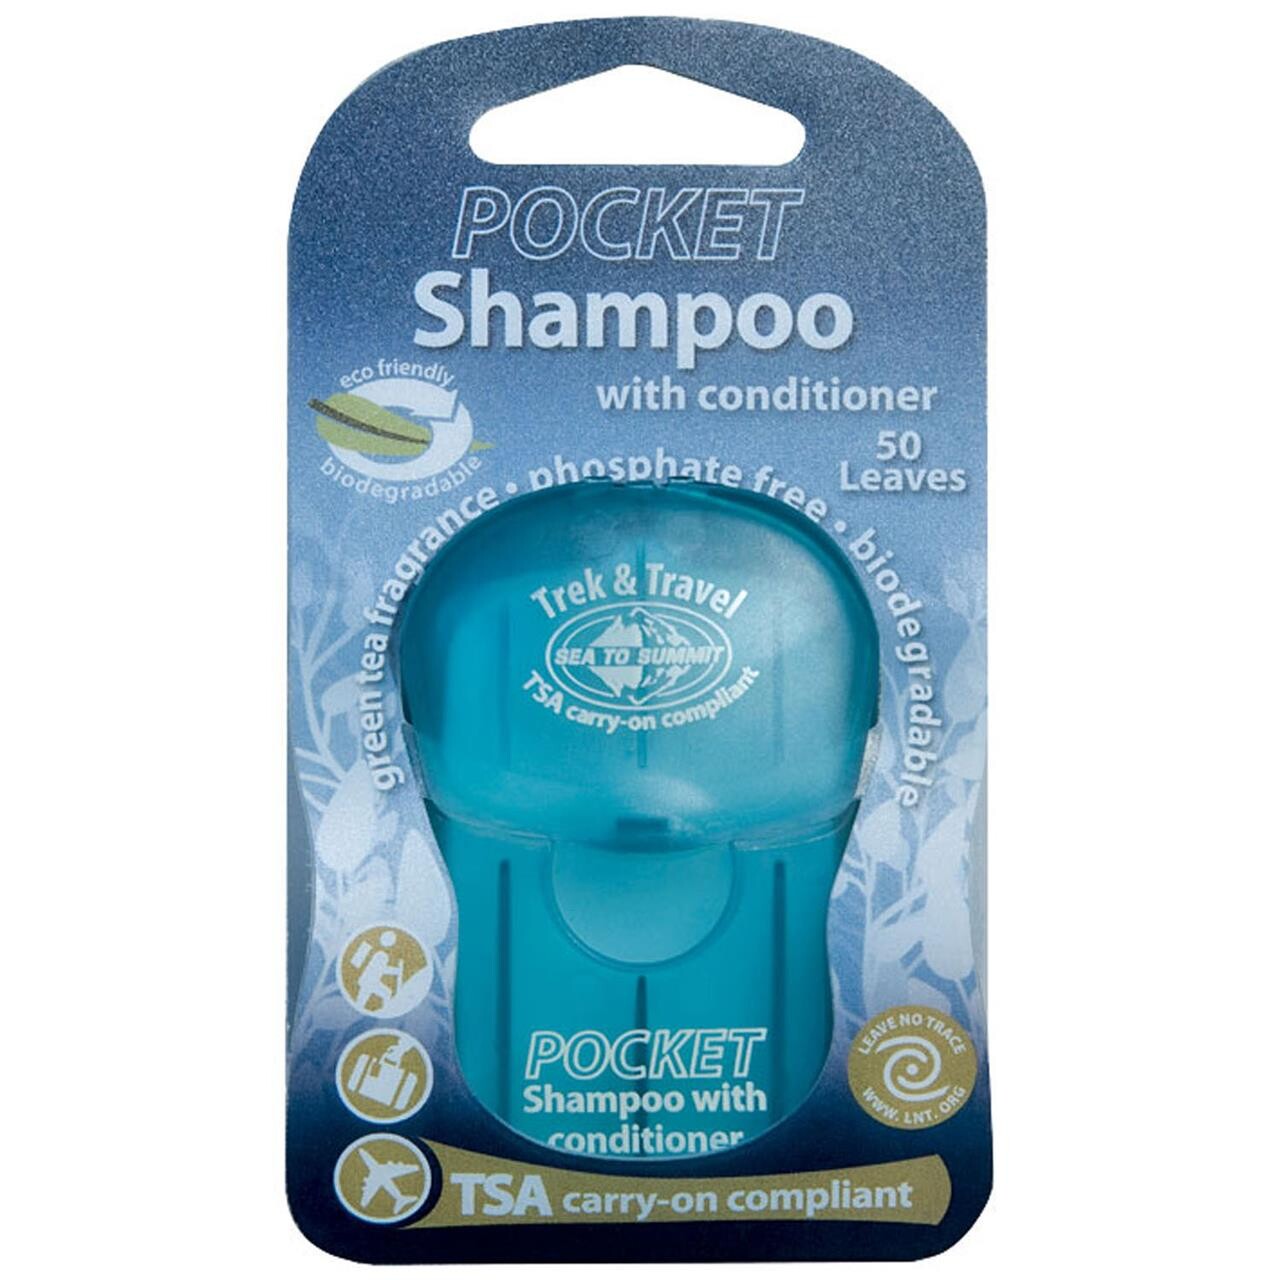 2: Trek & Travel Pocket Conditioning Shampoo 50 Leaf